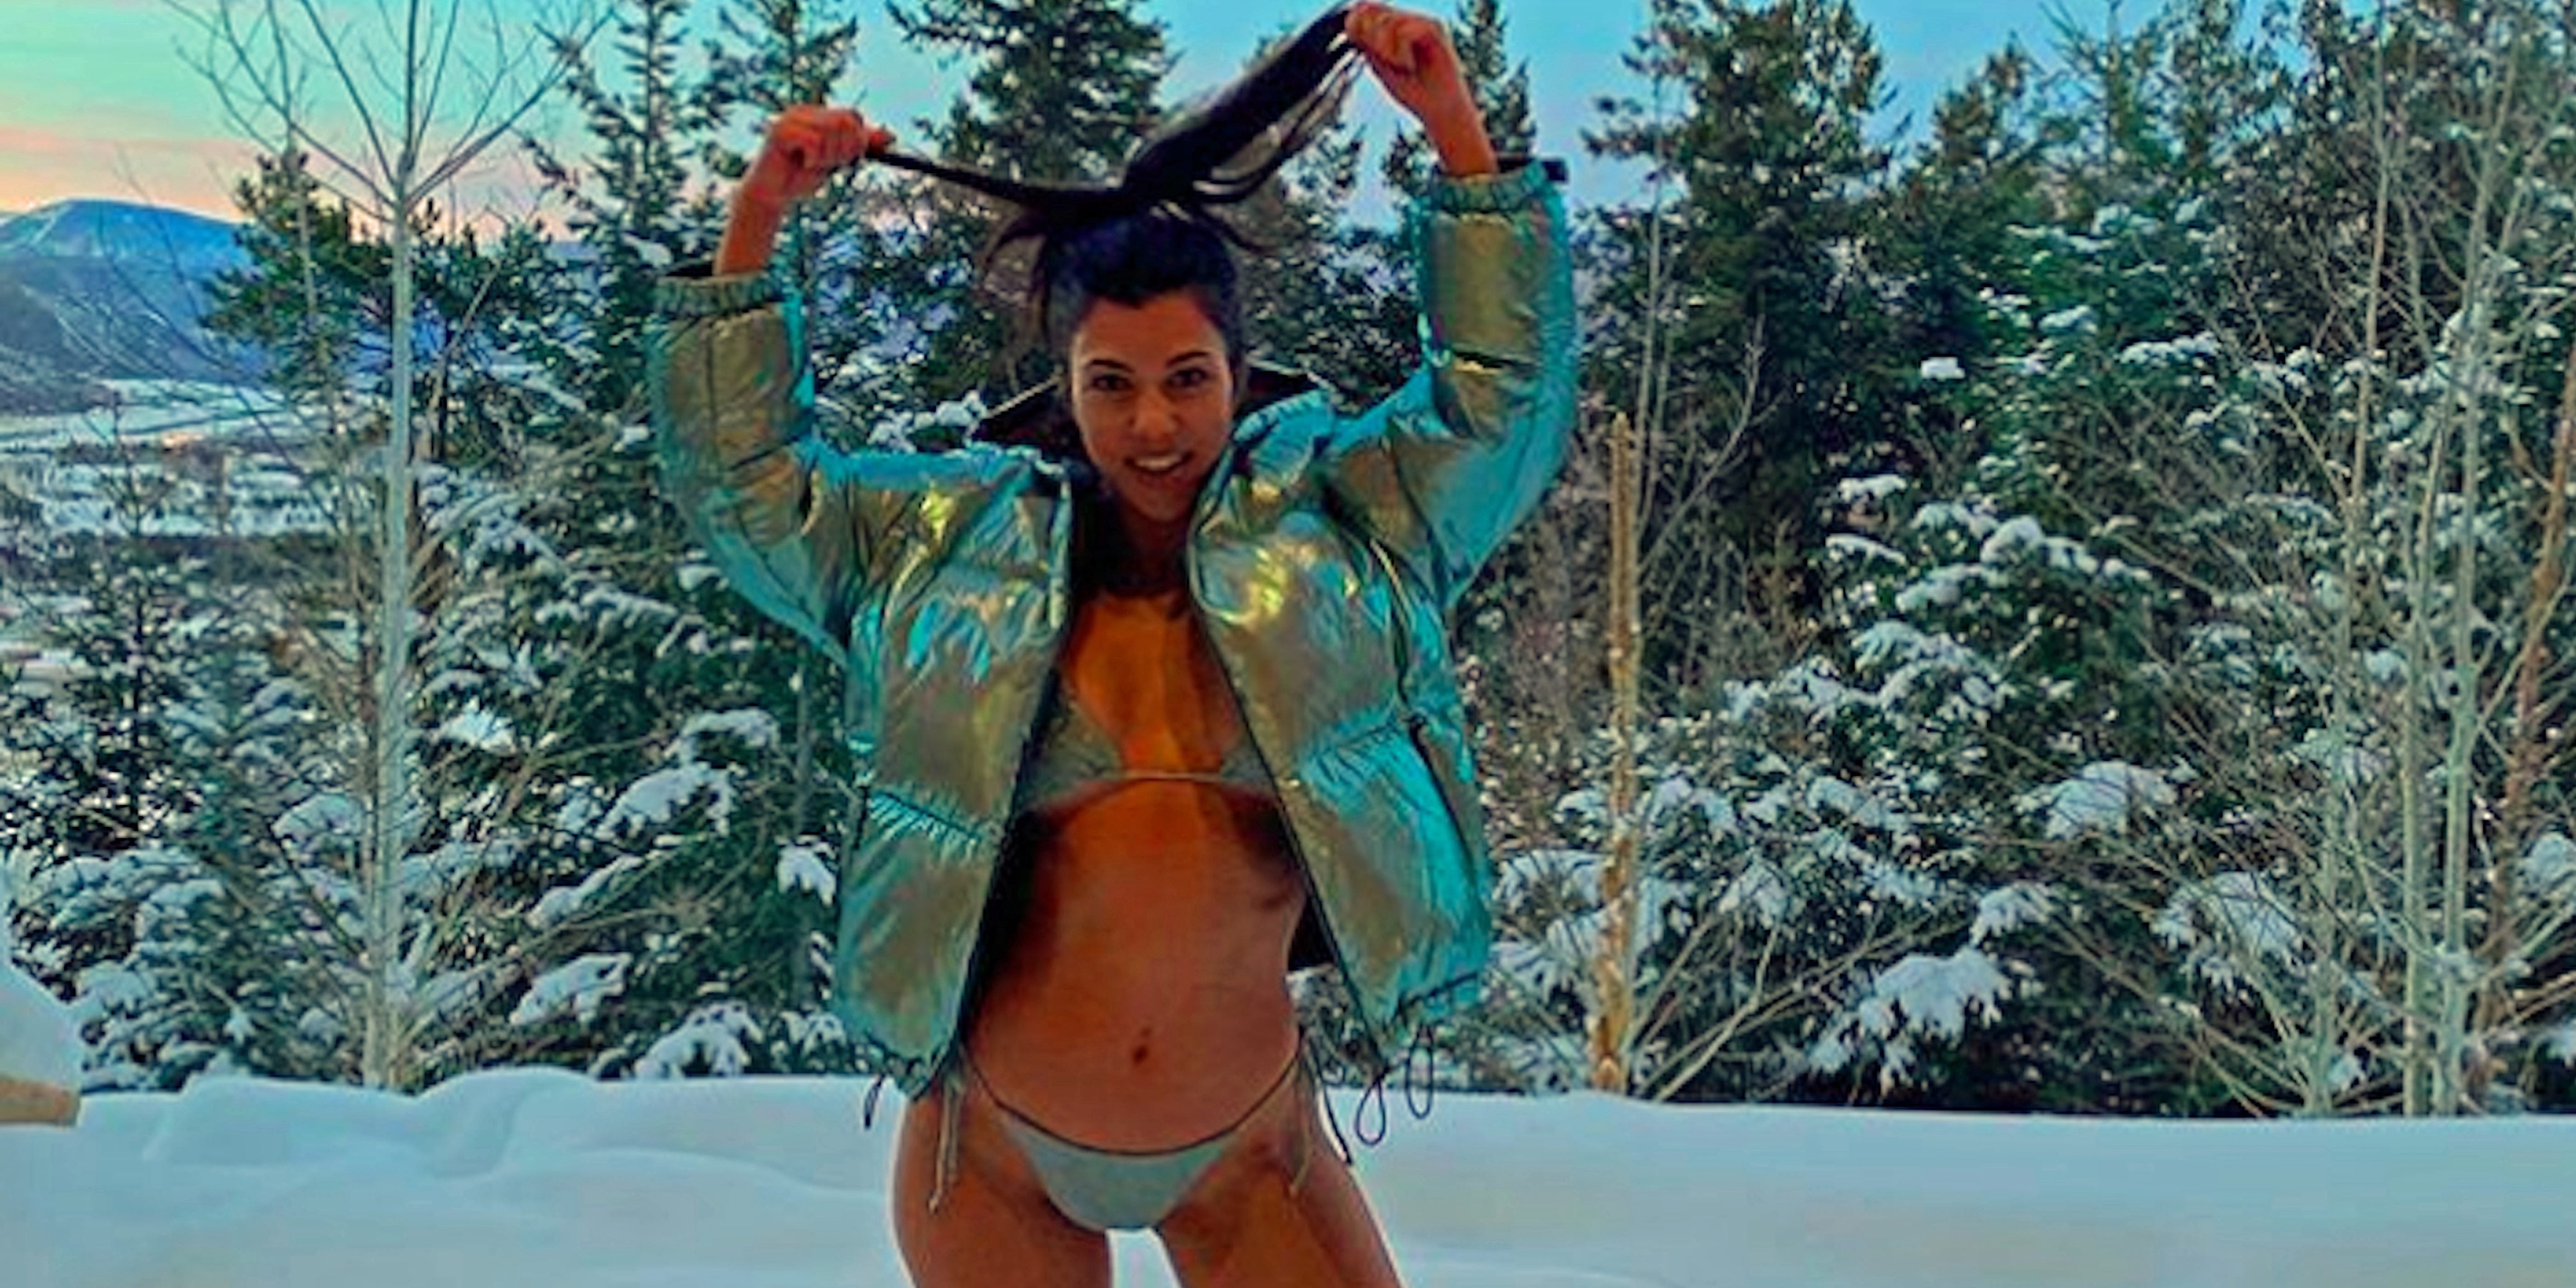 Kourtney Kardashian Silver Bikini and Bomber in the Snow